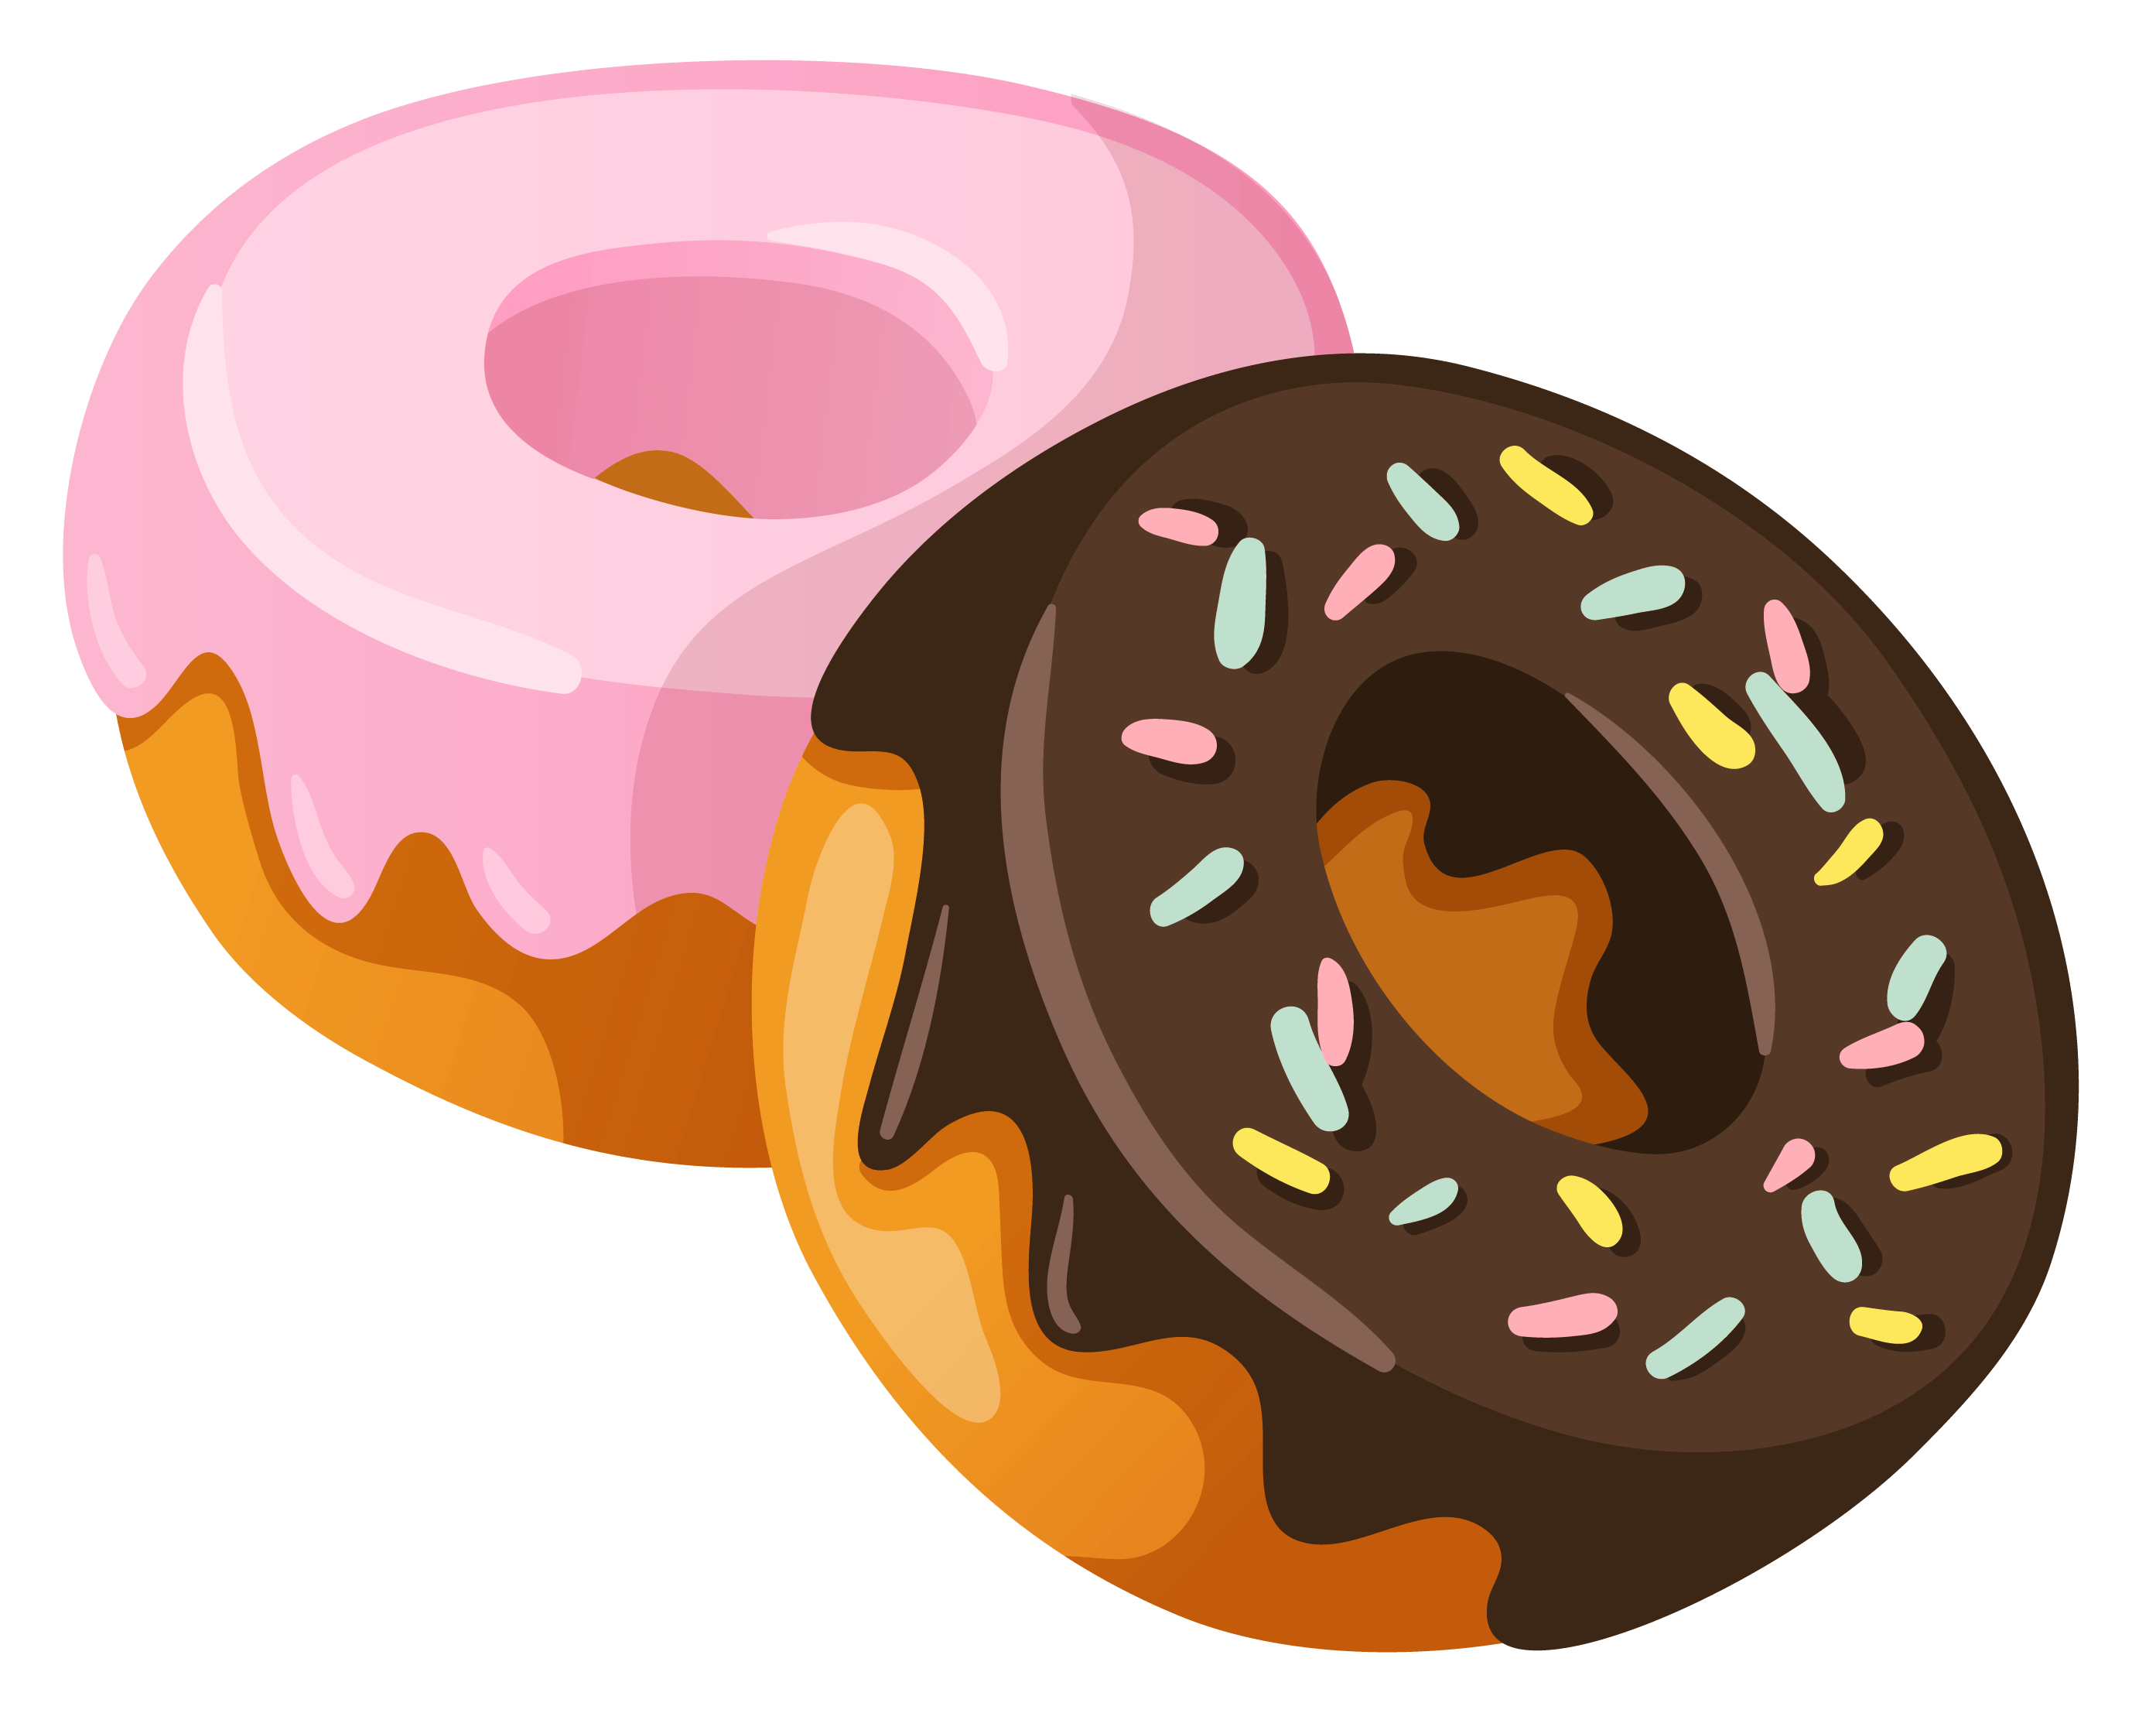 Mssu graphic design project. Donuts clipart cute